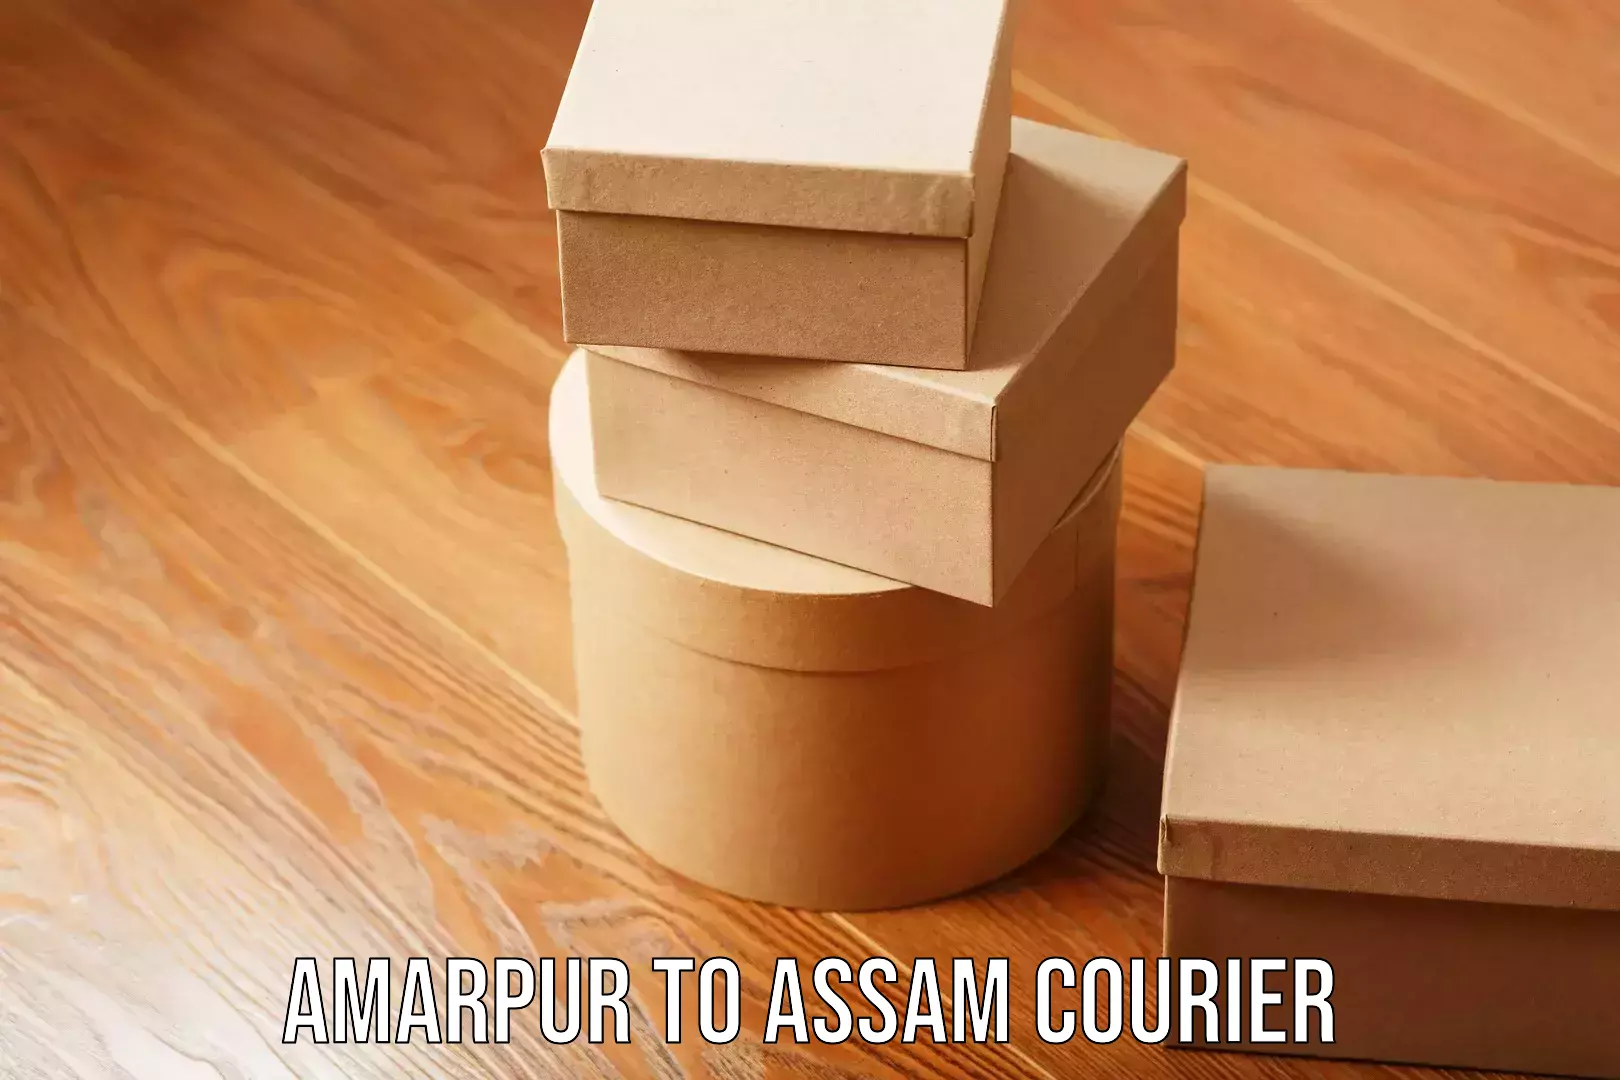 Professional courier handling Amarpur to Assam